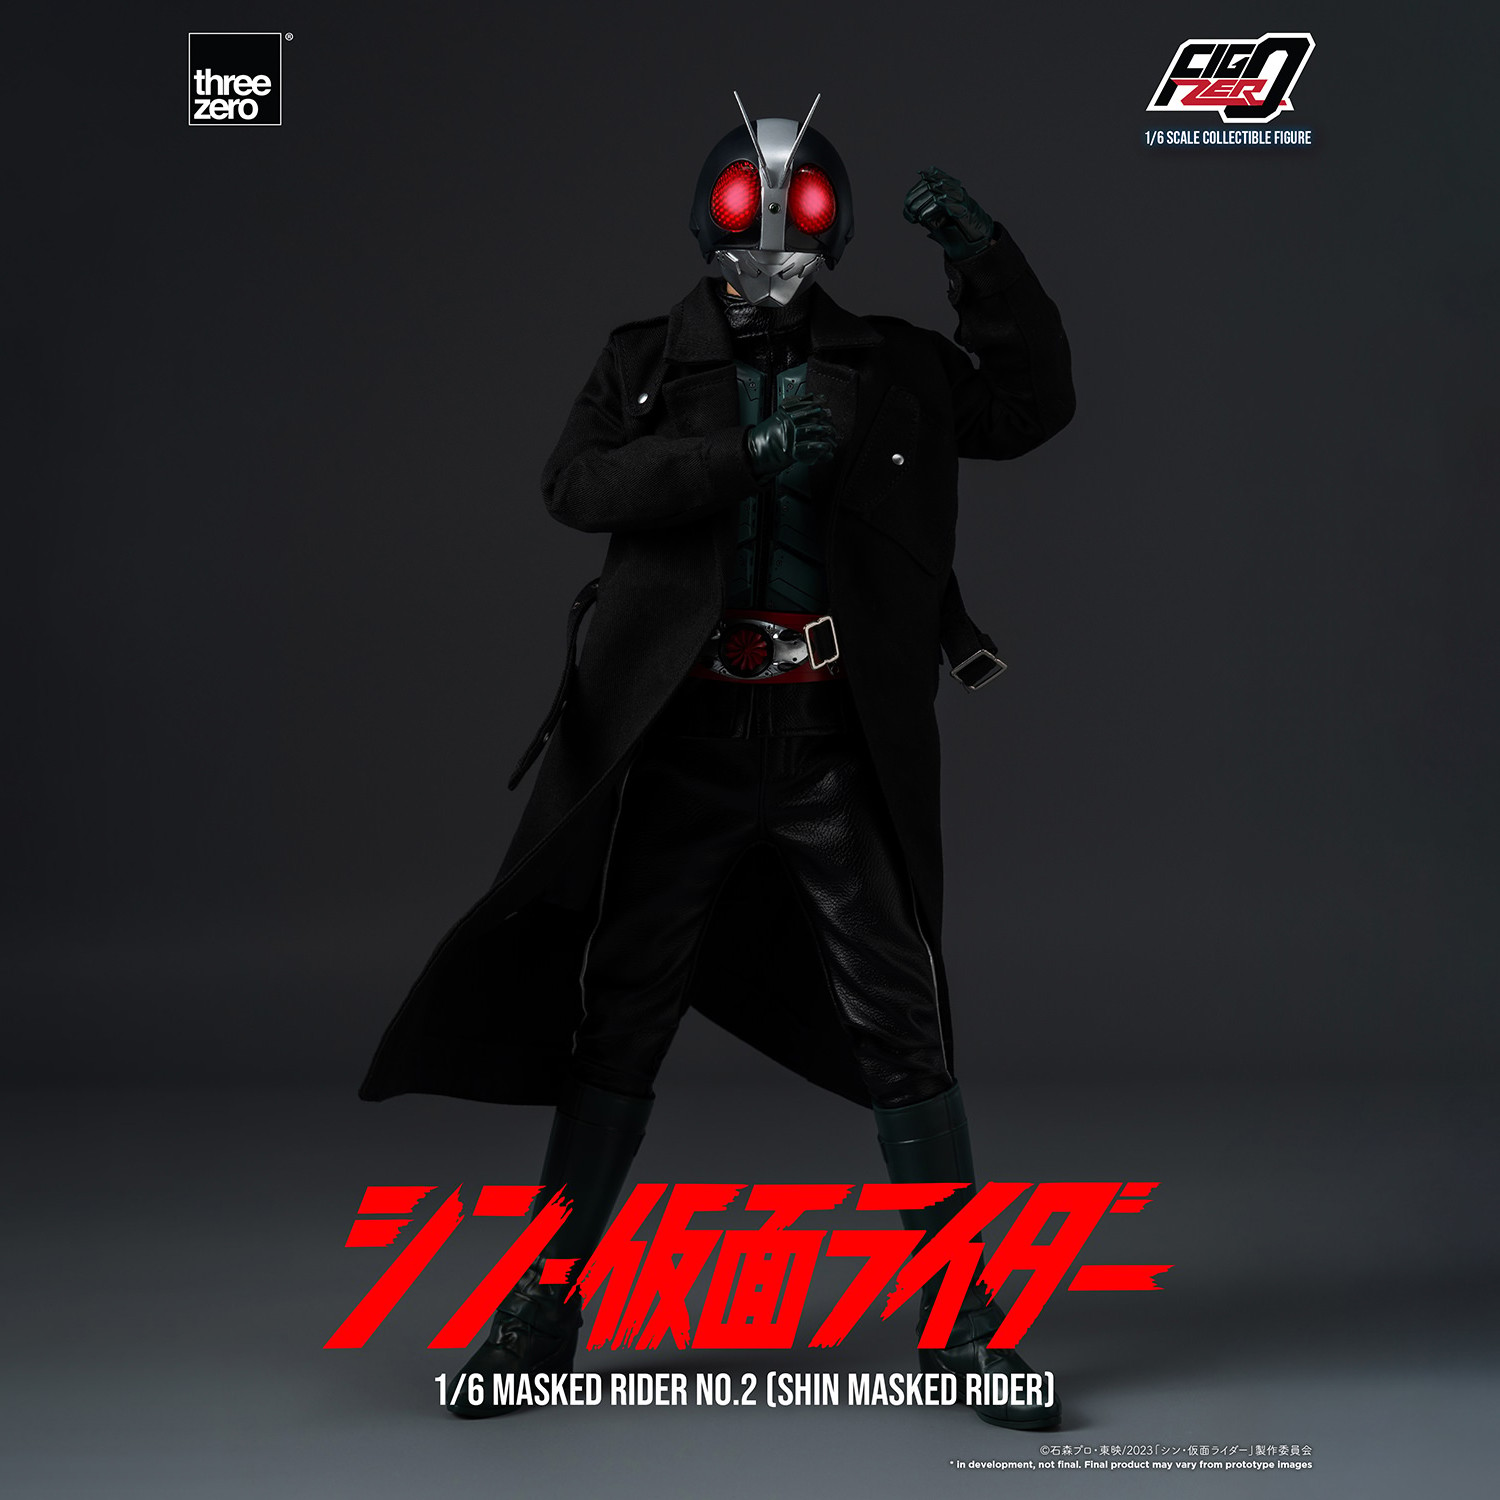 Shin Masked Rider No. 2 (Prototype Shown) View 4